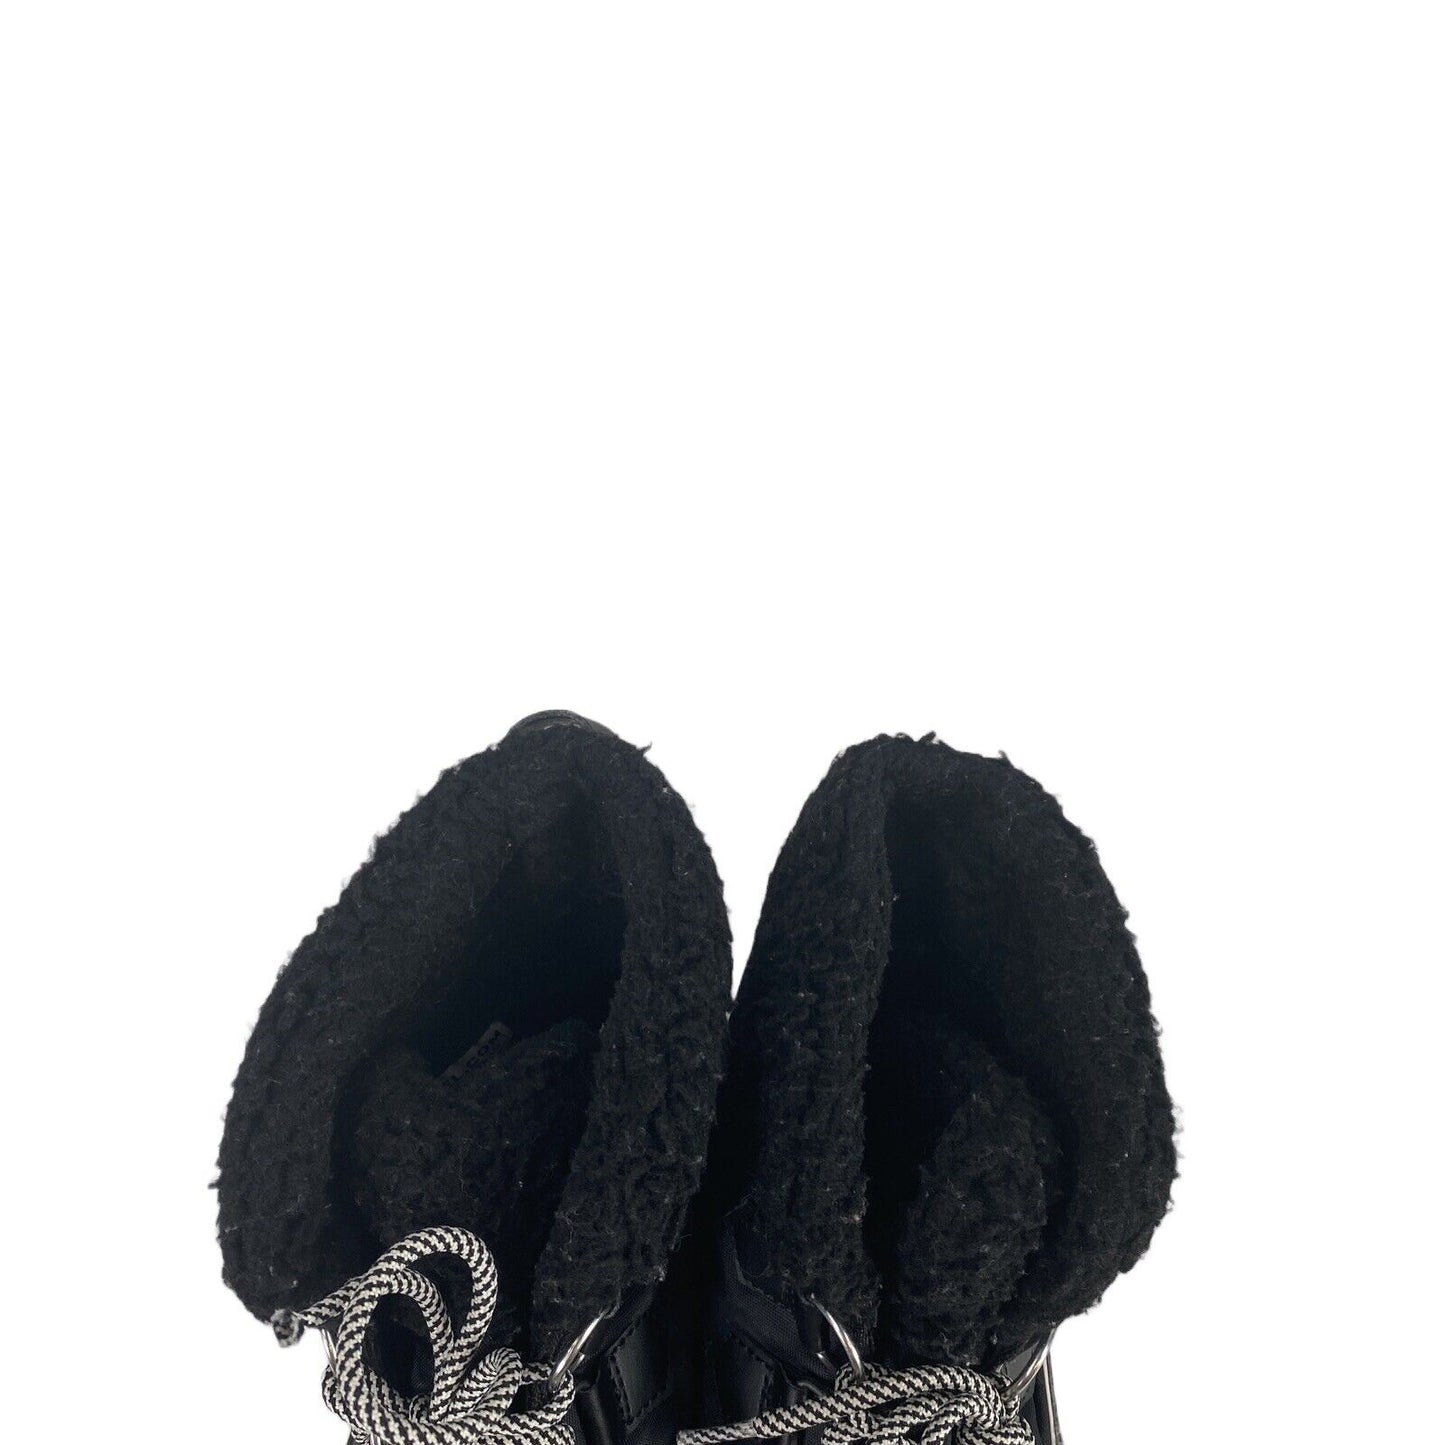 Sorel Women's Black Explorer Carnival Lace Up Ankle Winter Boots - 9